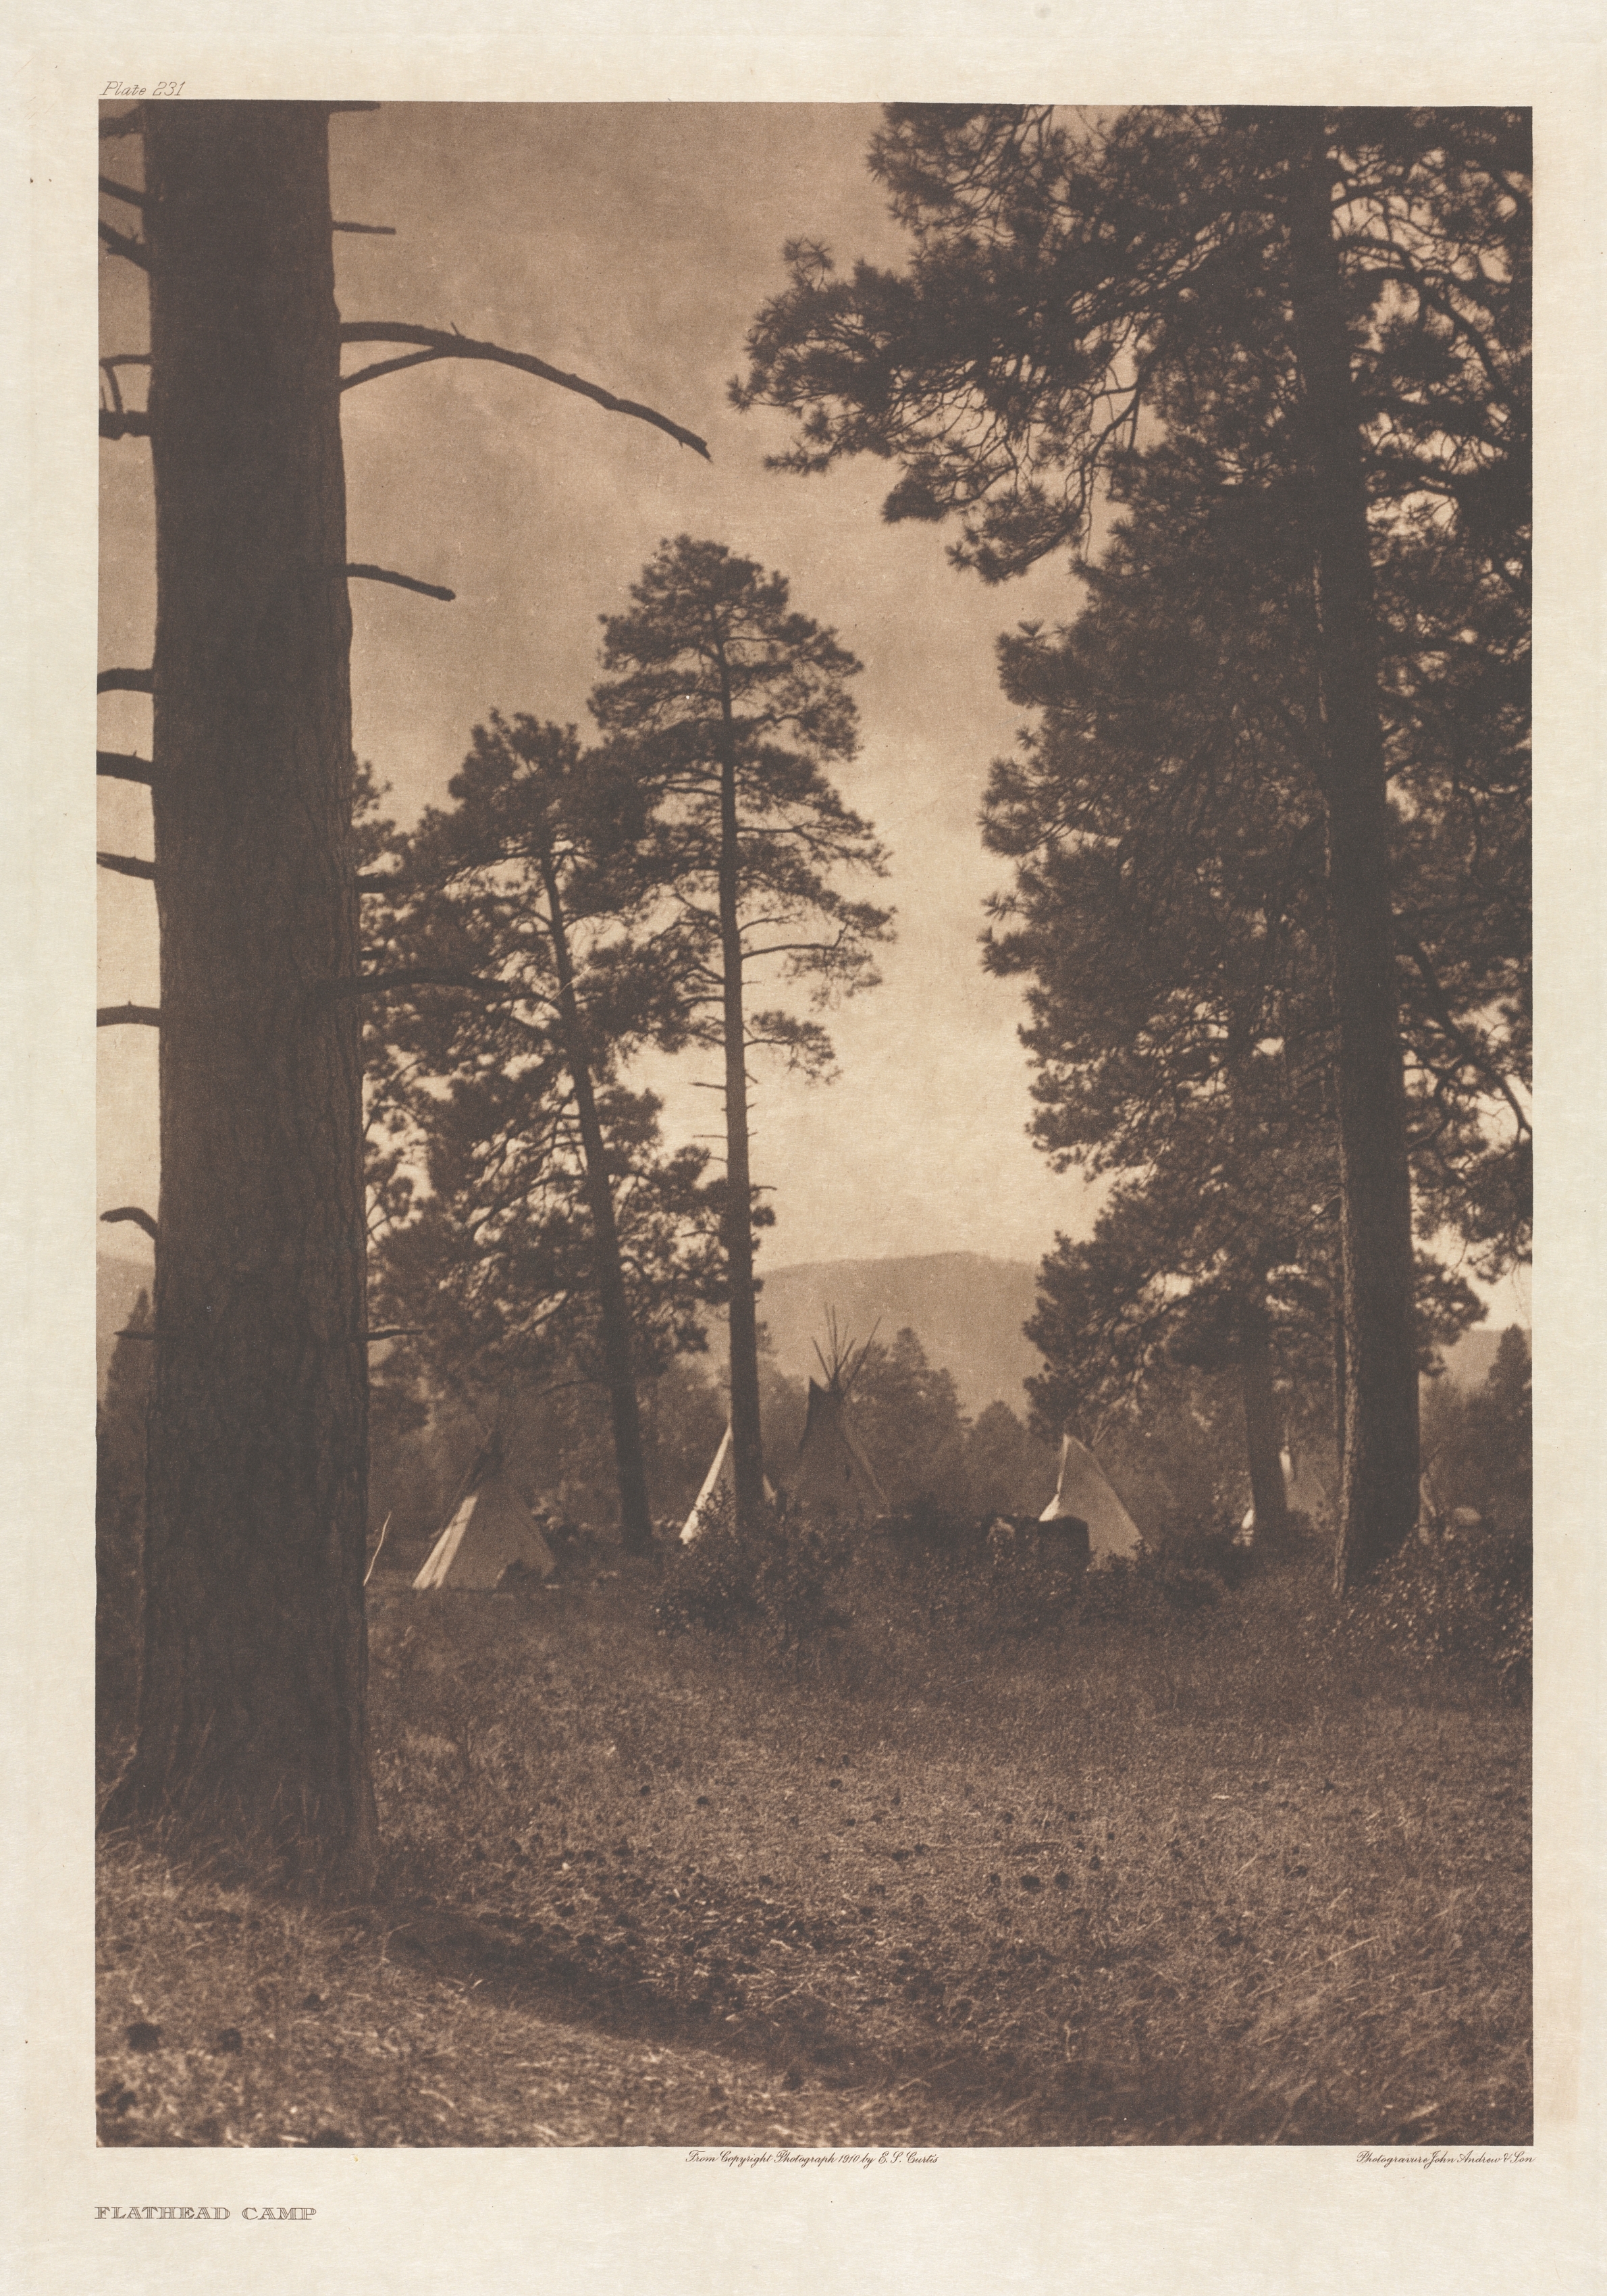 Portfolio VII, Plate 231: Flathead Camp